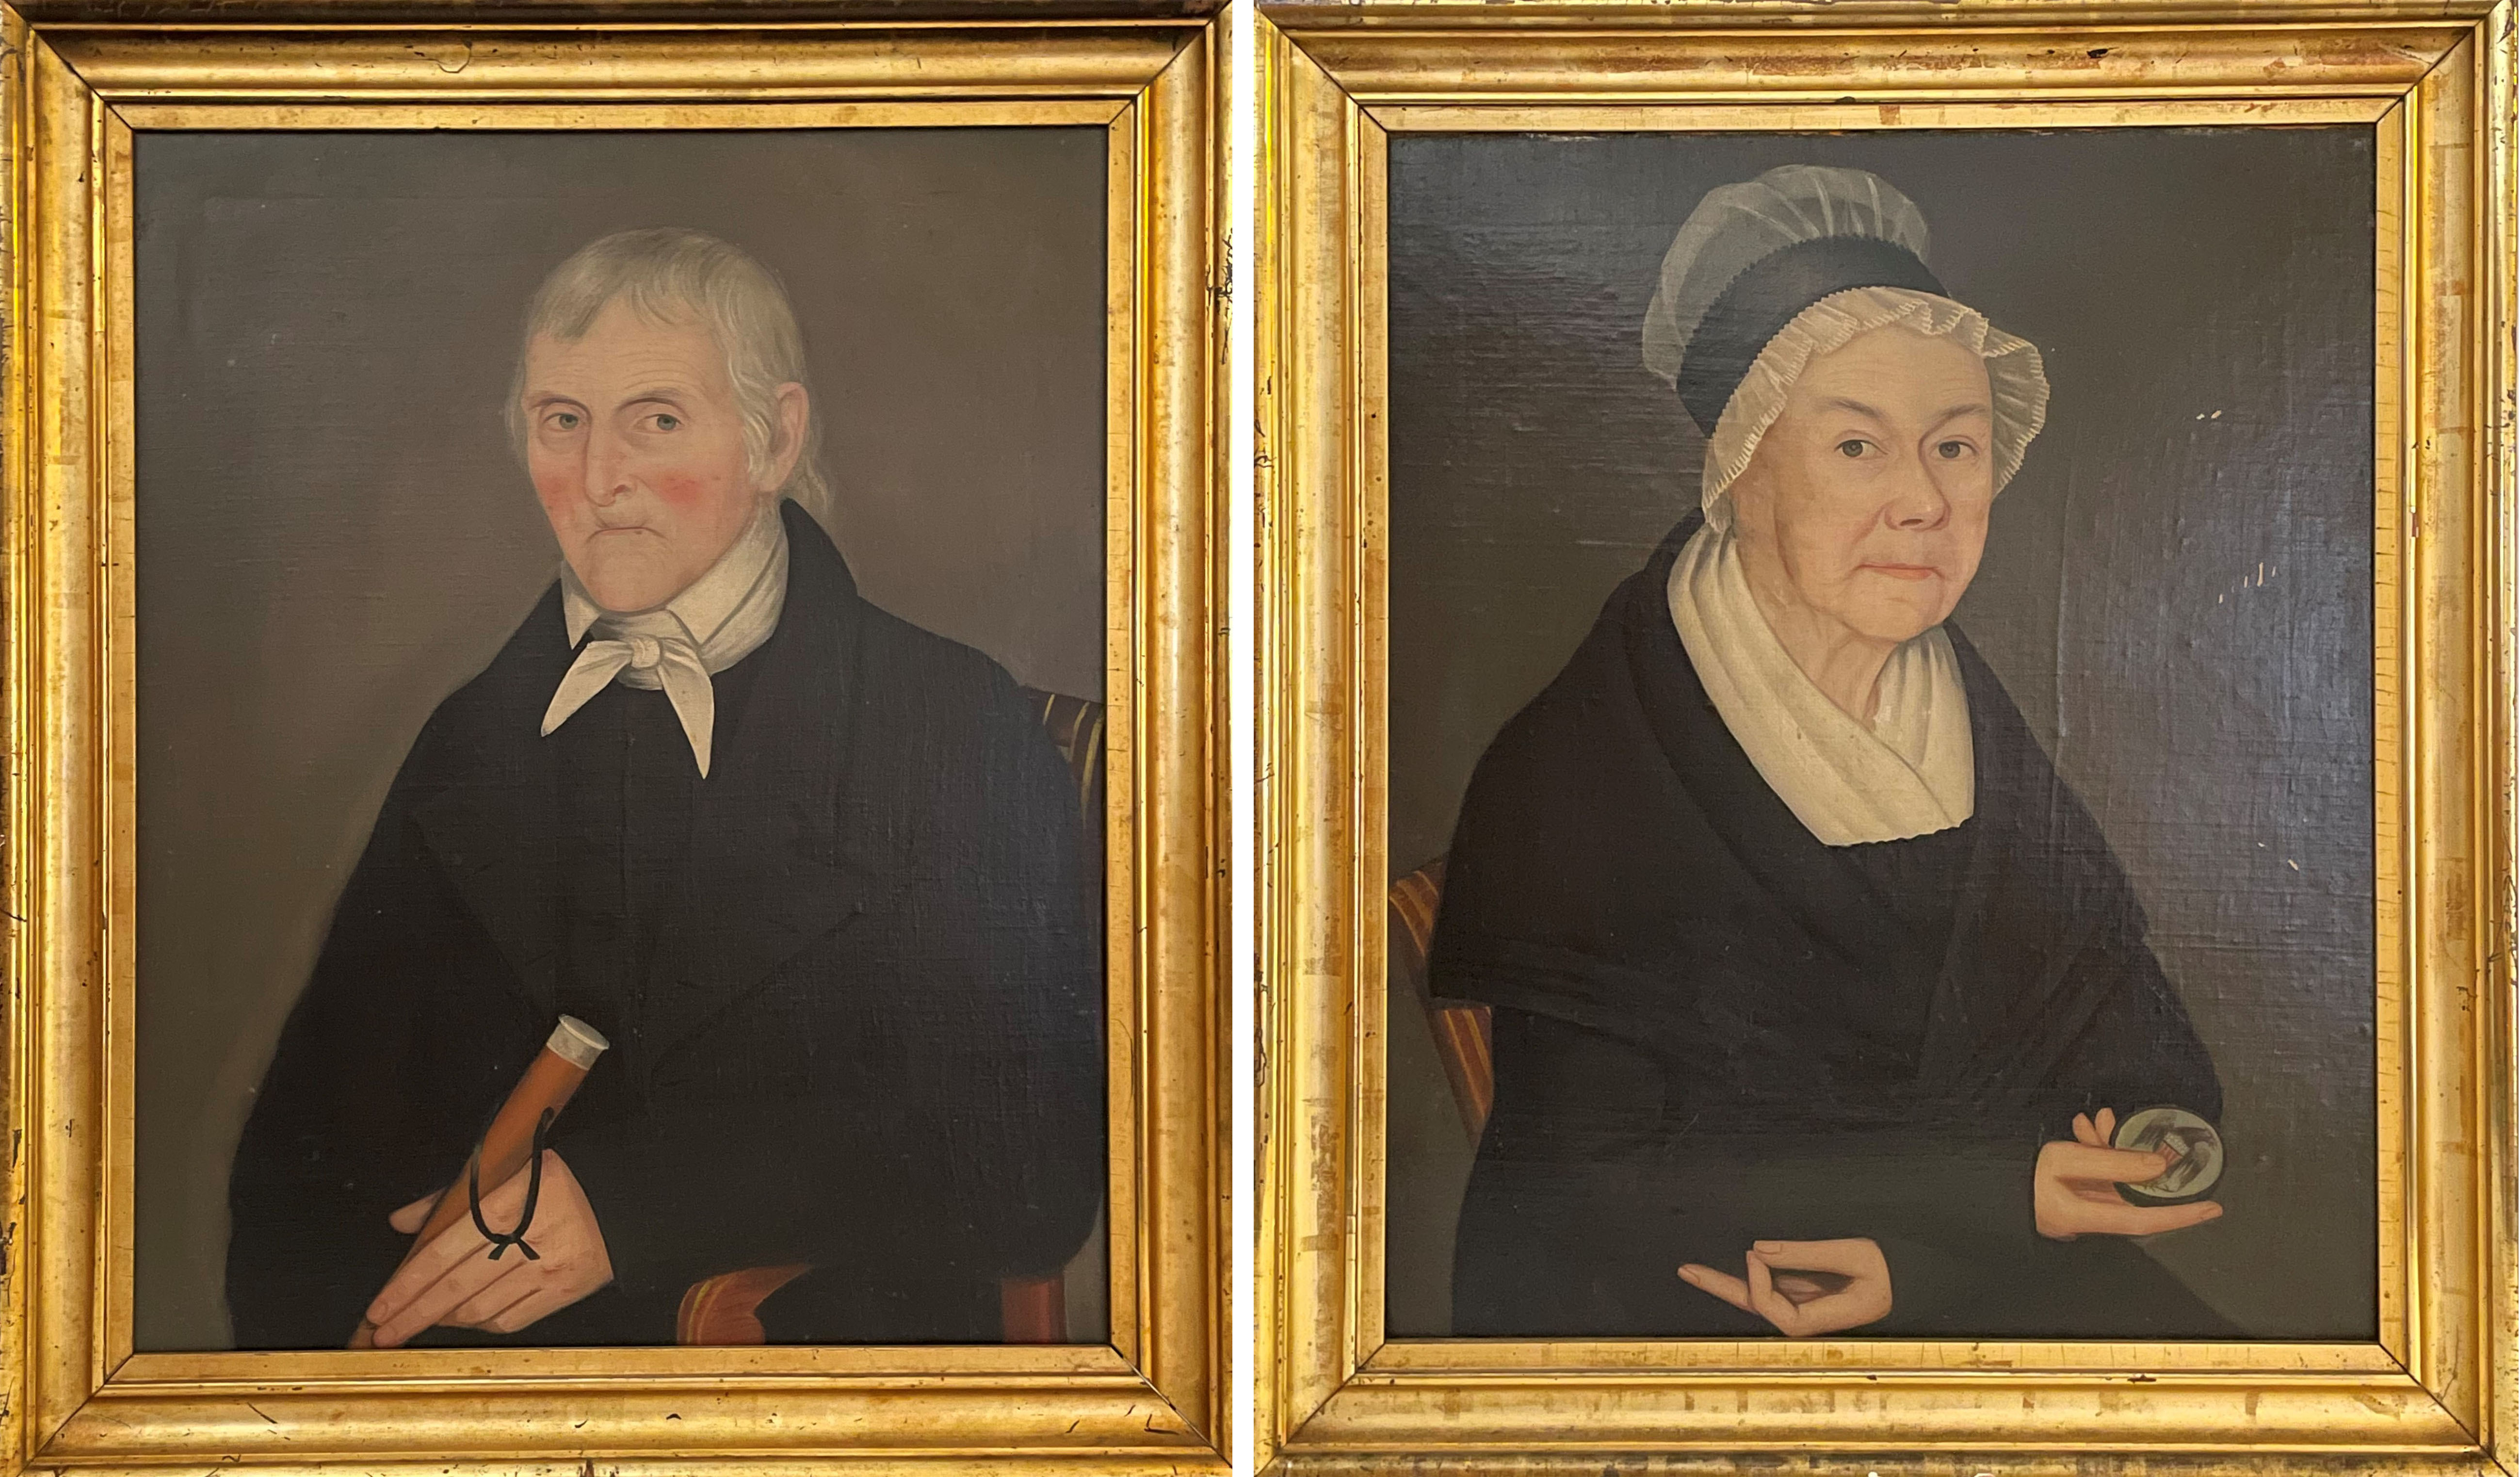 Portraits by Ammi Phillips (1788-1865) of Dirck D. Wynkoop and Annatje Eltinge Wynkoop, circa 1821. Oil on canvas. Historic Huguenot Street Permanent Collection, gift of Marie J. Wiersum. Courtesy of Historic Huguenot Street